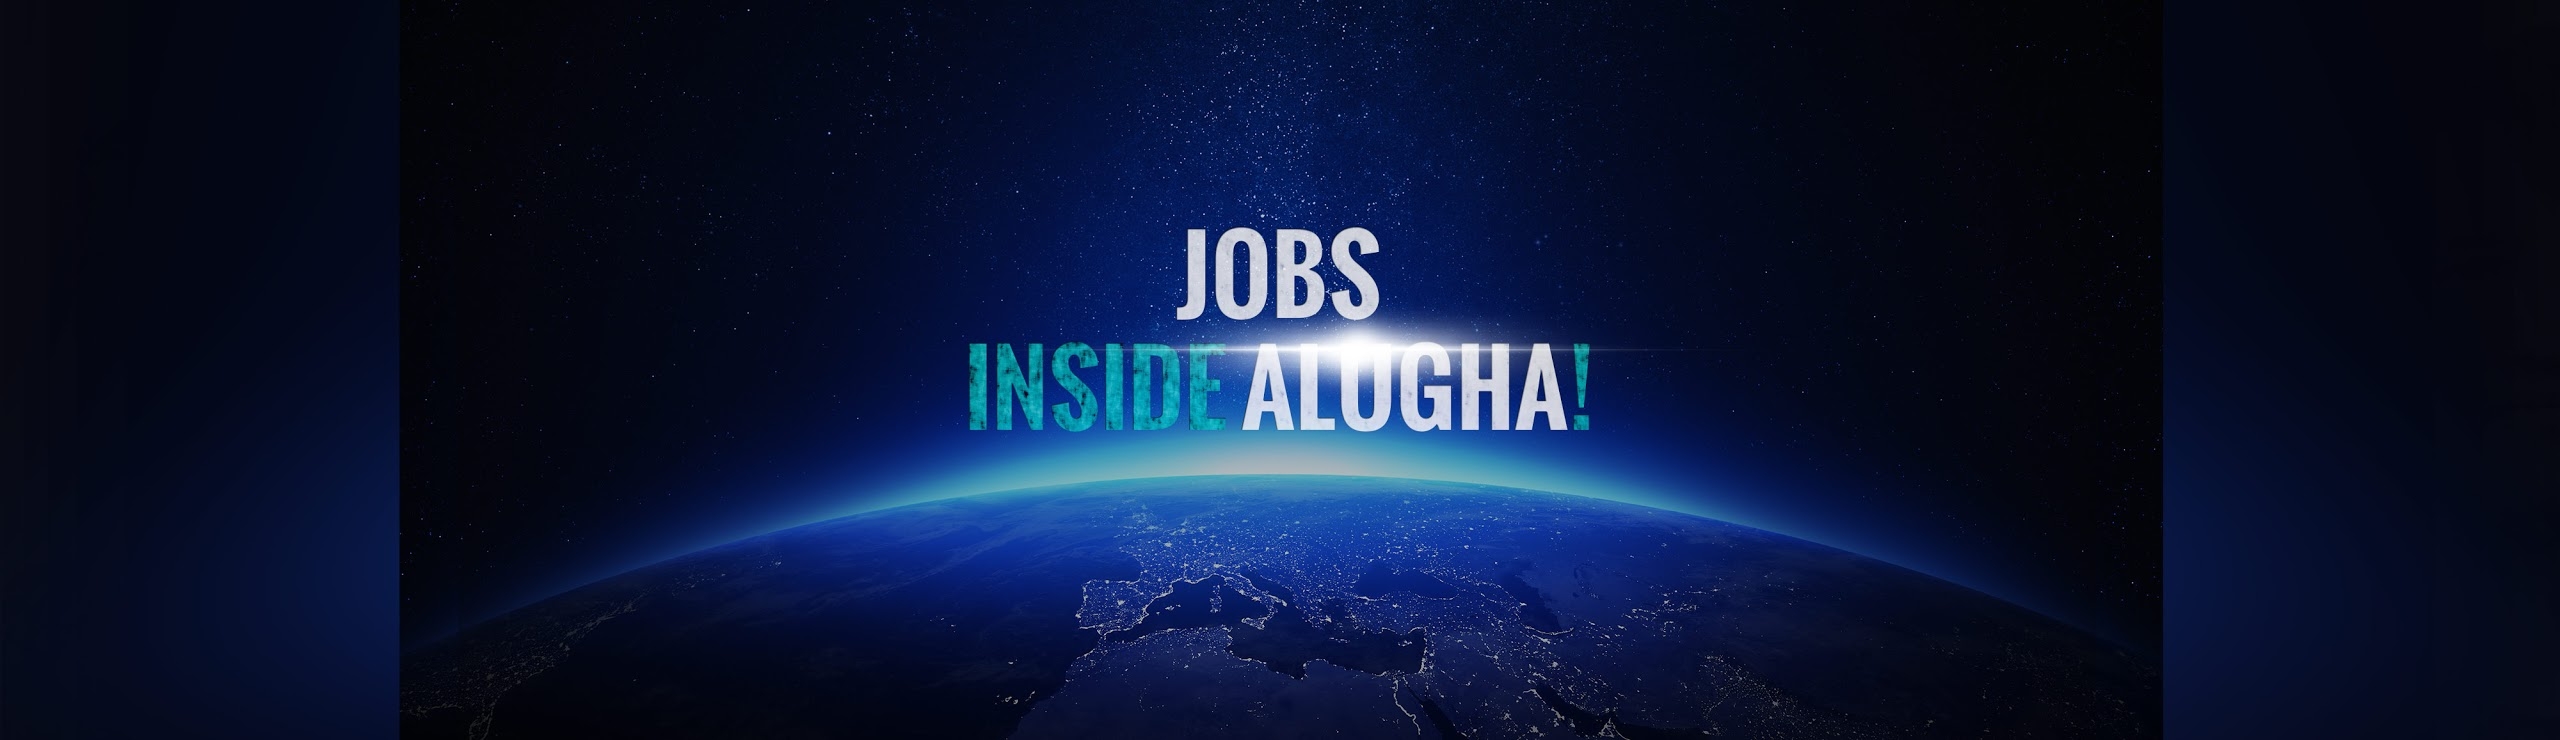 Jobs inside alugha!